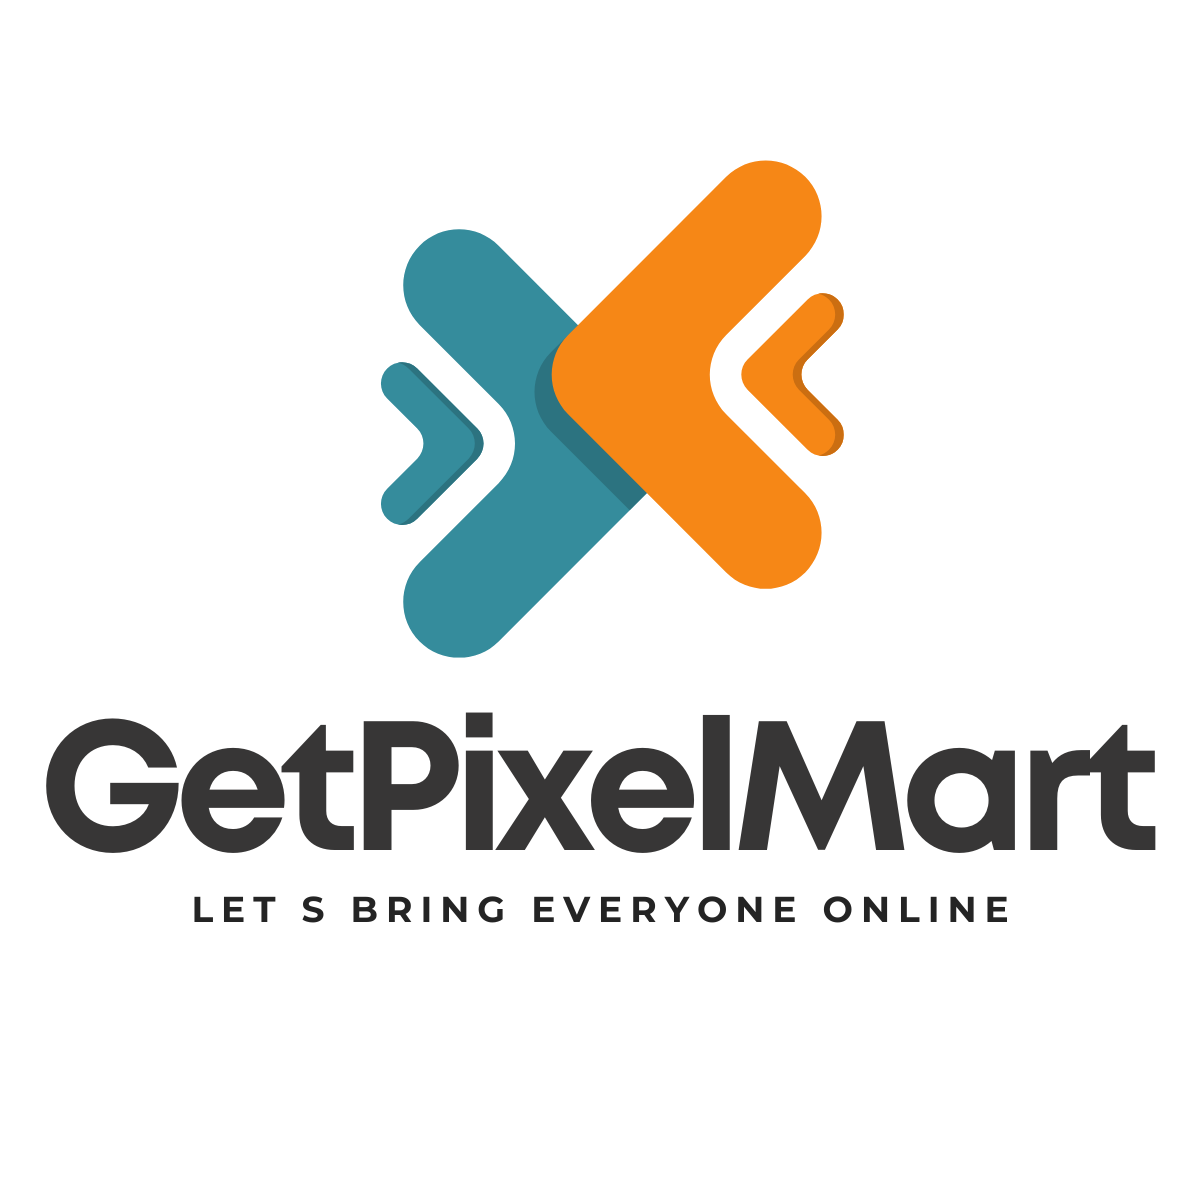 GetPixelMart Web Pvt. Ltd. Logo